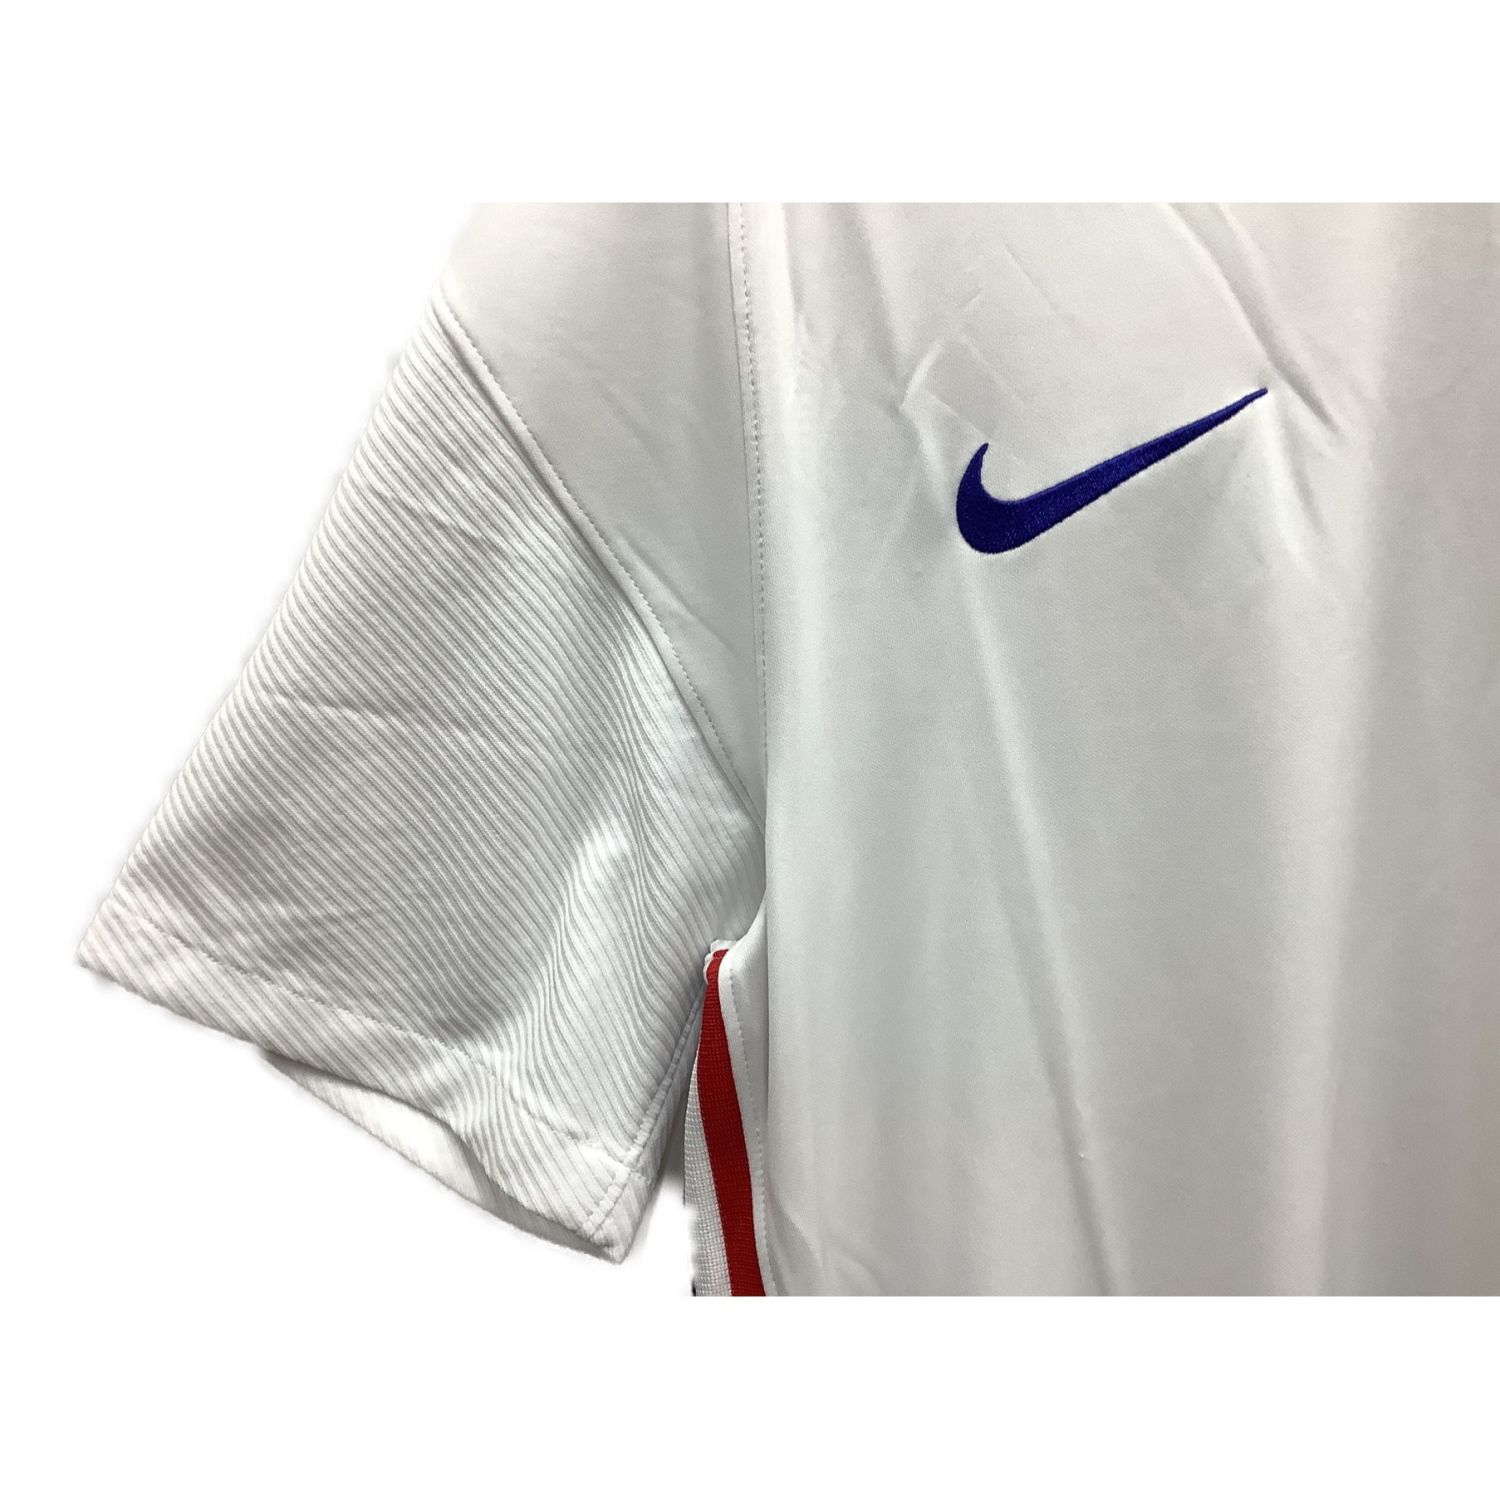 Nike ナイキ サッカーユニフォーム メンズ Usサイズm ホワイト フランス代表 Fff アウェイ サッカー レプリカユニフォーム Cdd0699 100 トレファクonline